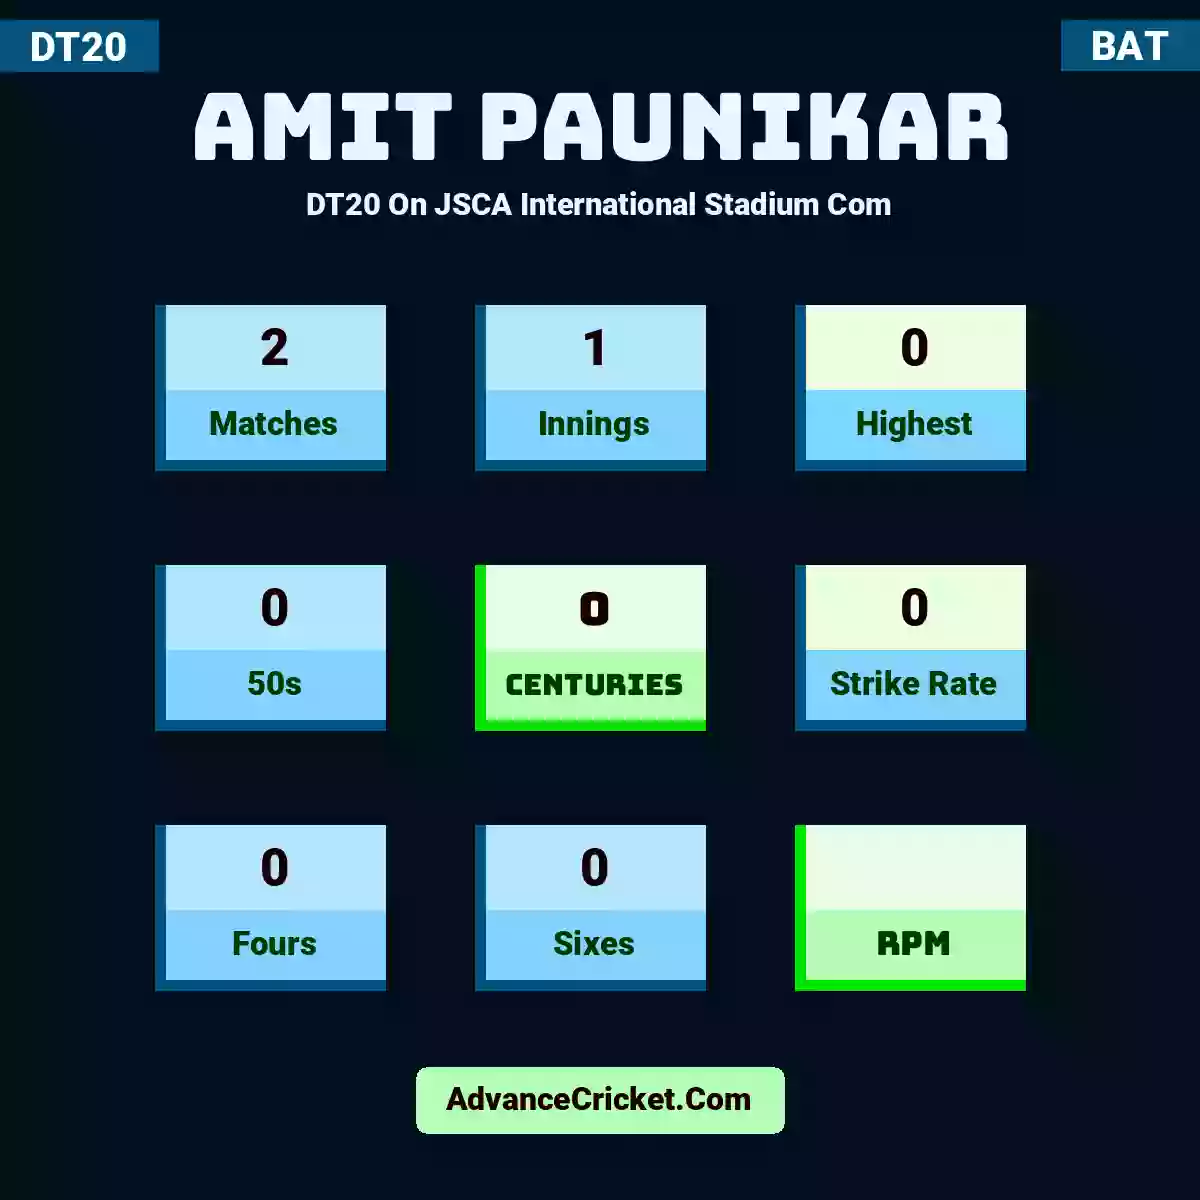 Amit Paunikar DT20  On JSCA International Stadium Com, Amit Paunikar played 2 matches, scored 0 runs as highest, 0 half-centuries, and 0 centuries, with a strike rate of 0. A.Paunikar hit 0 fours and 0 sixes.